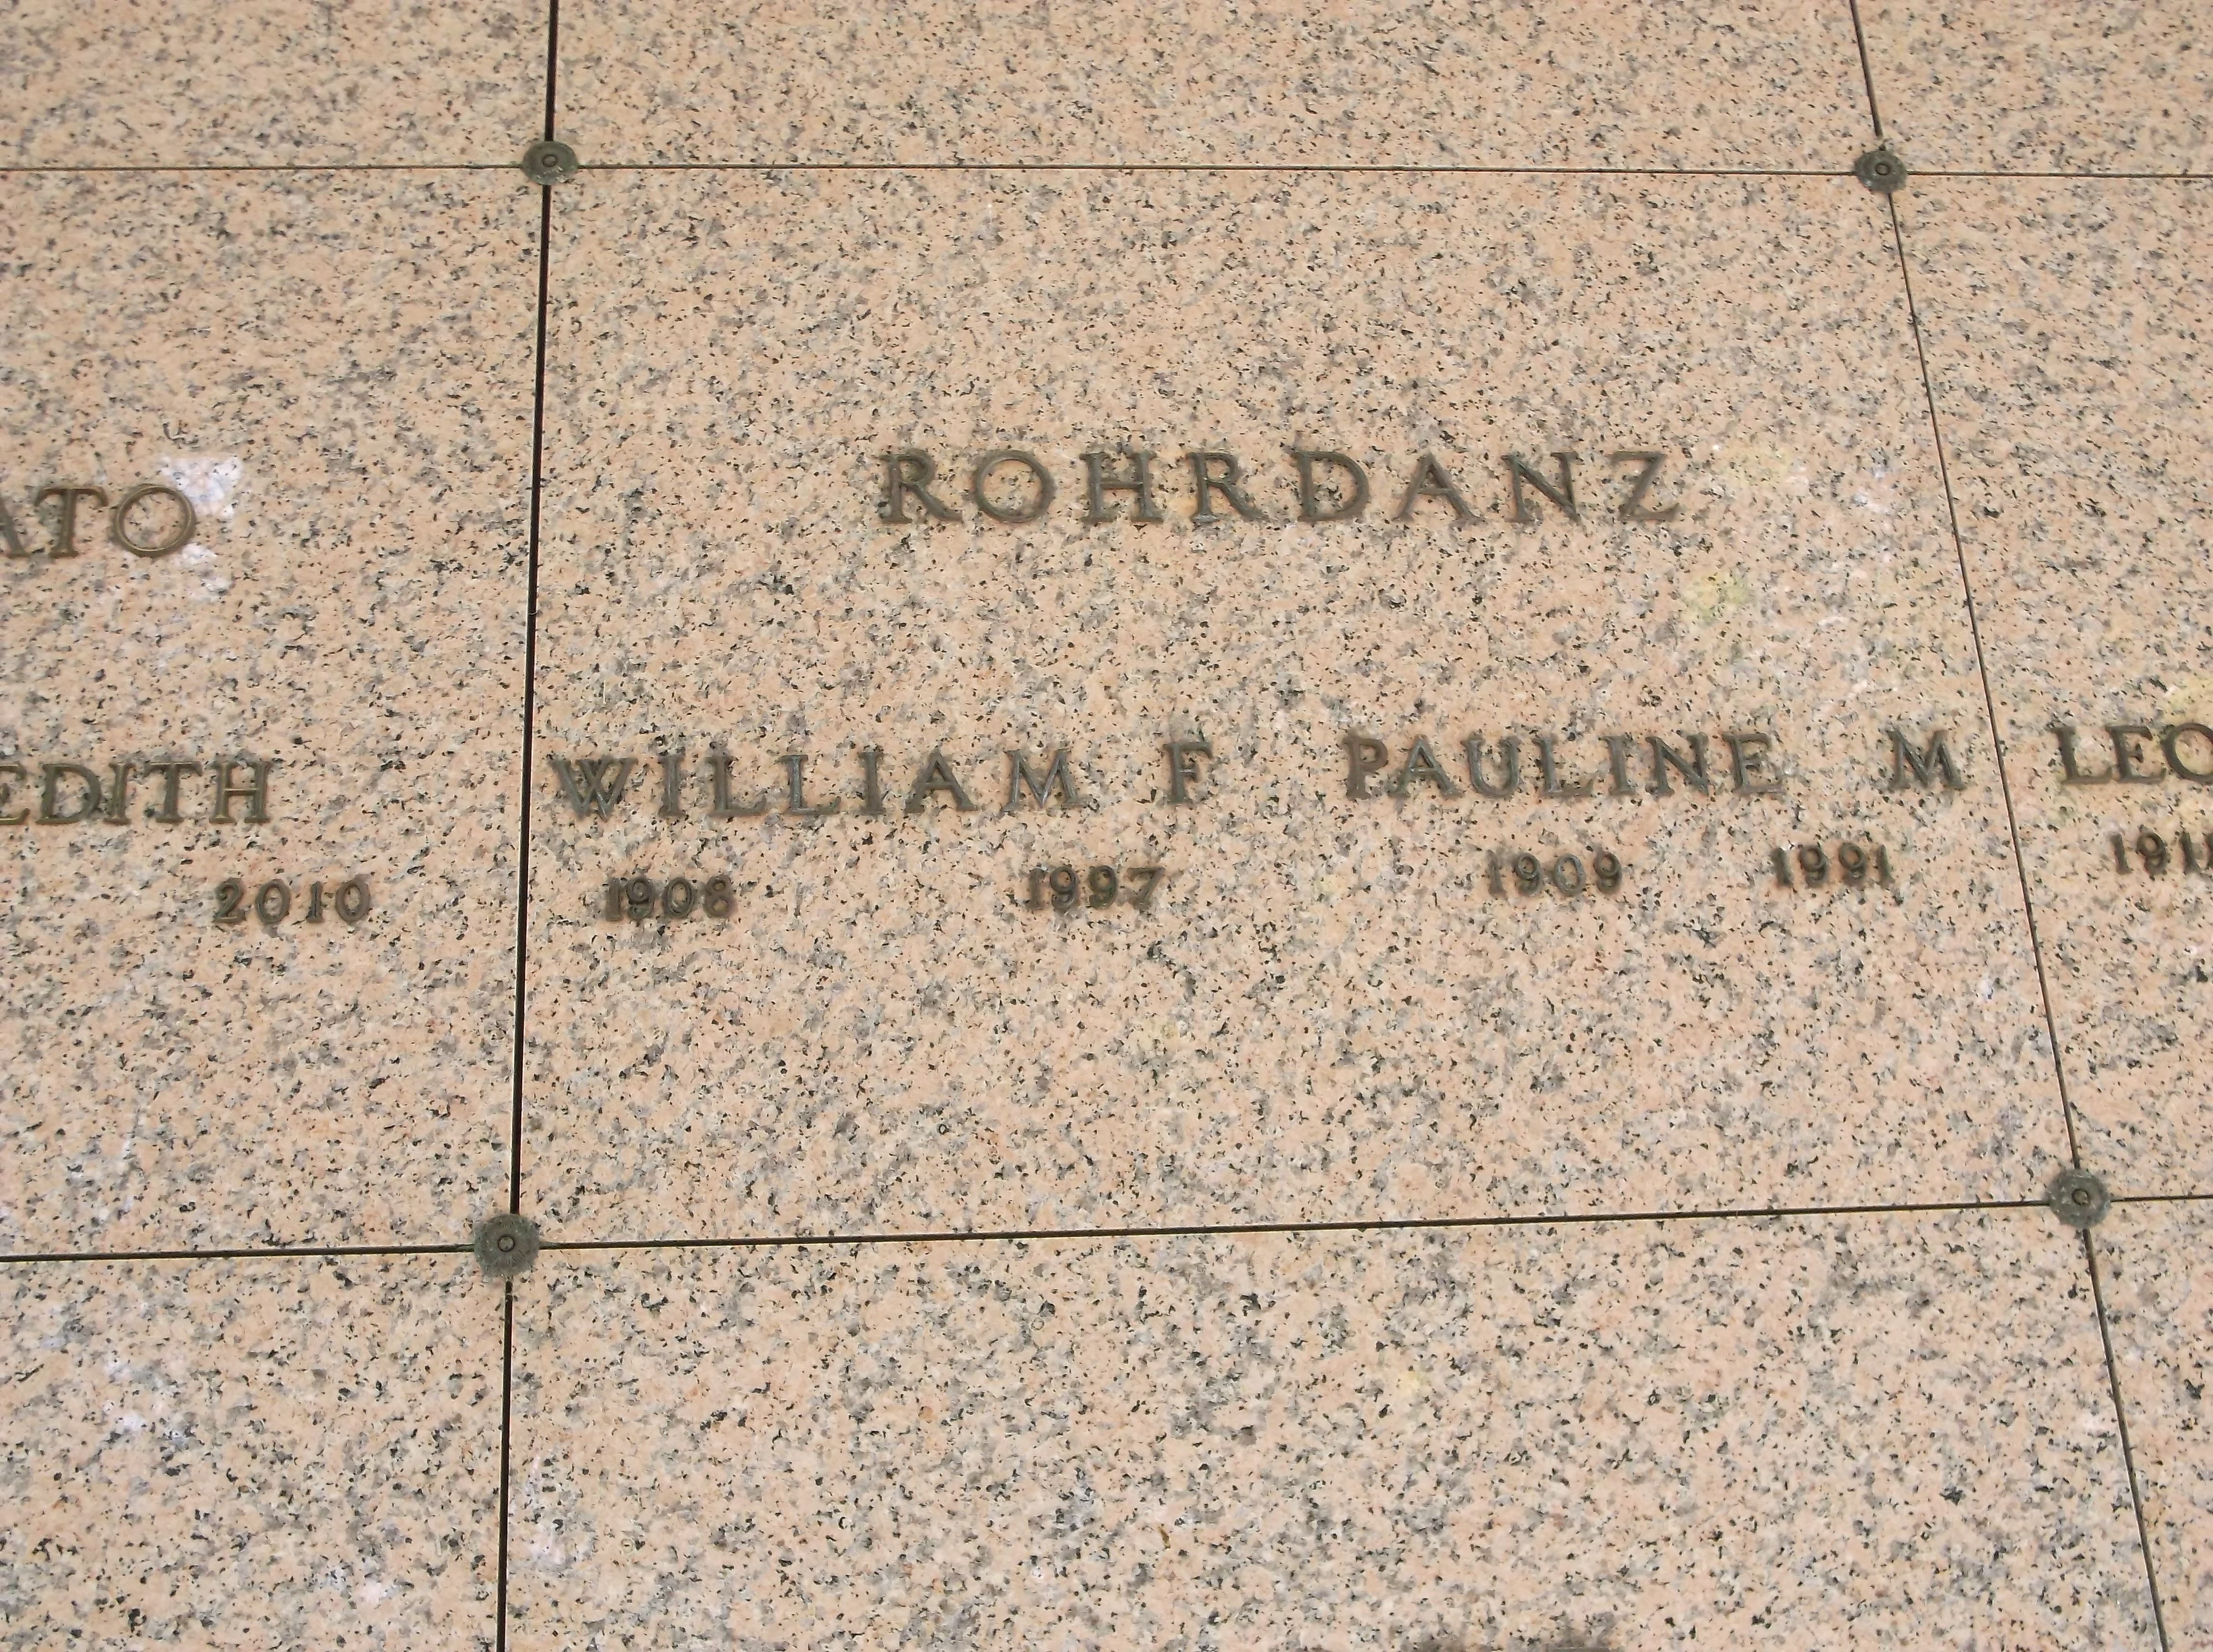 William F Rohrdanz